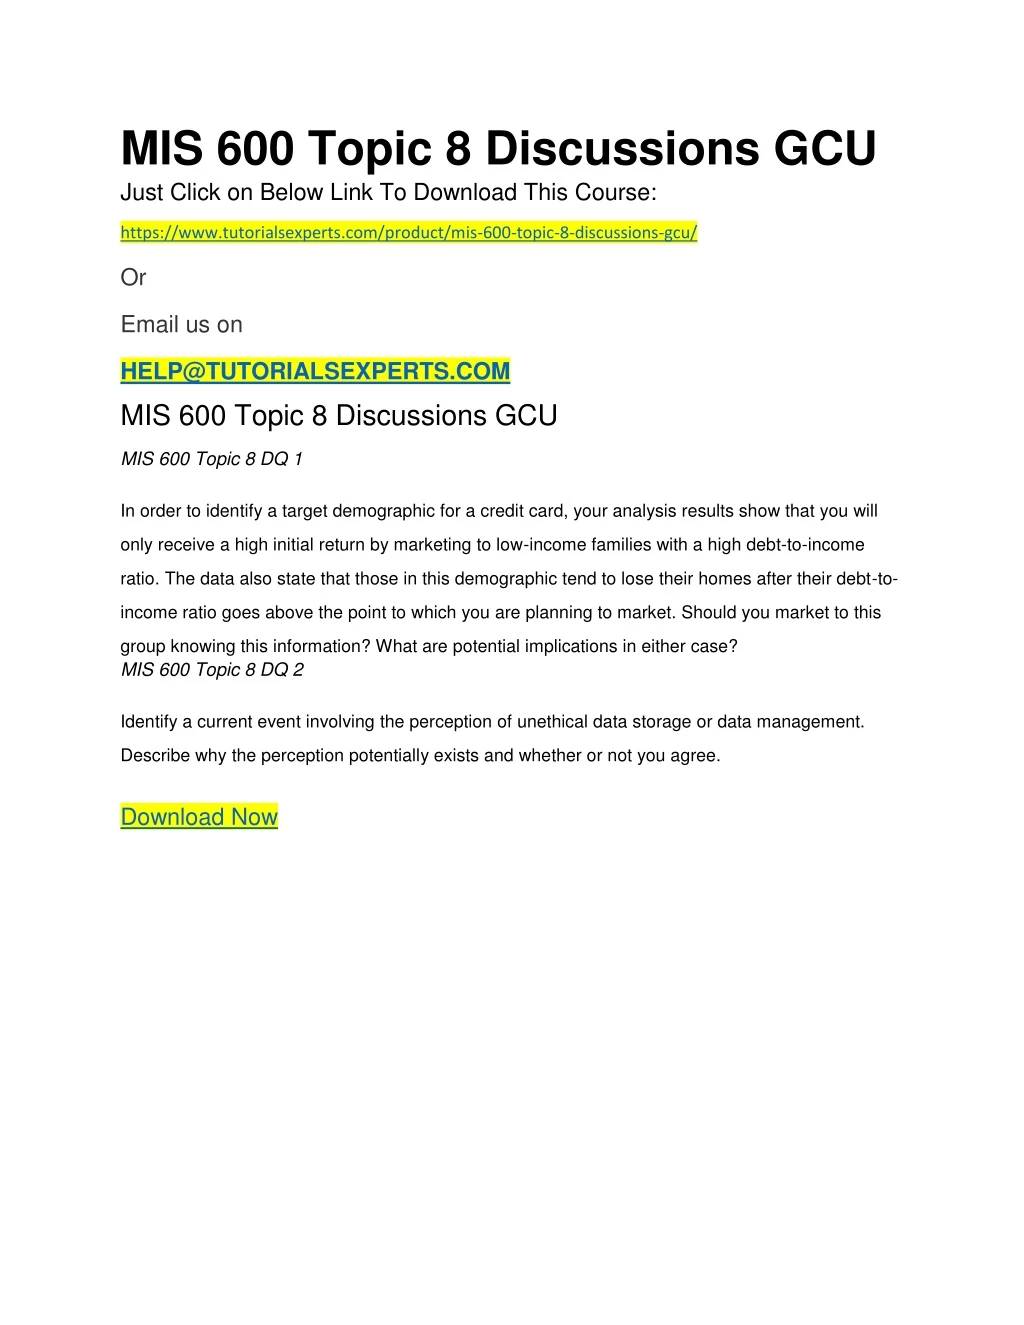 mis 600 topic 8 discussions gcu just click